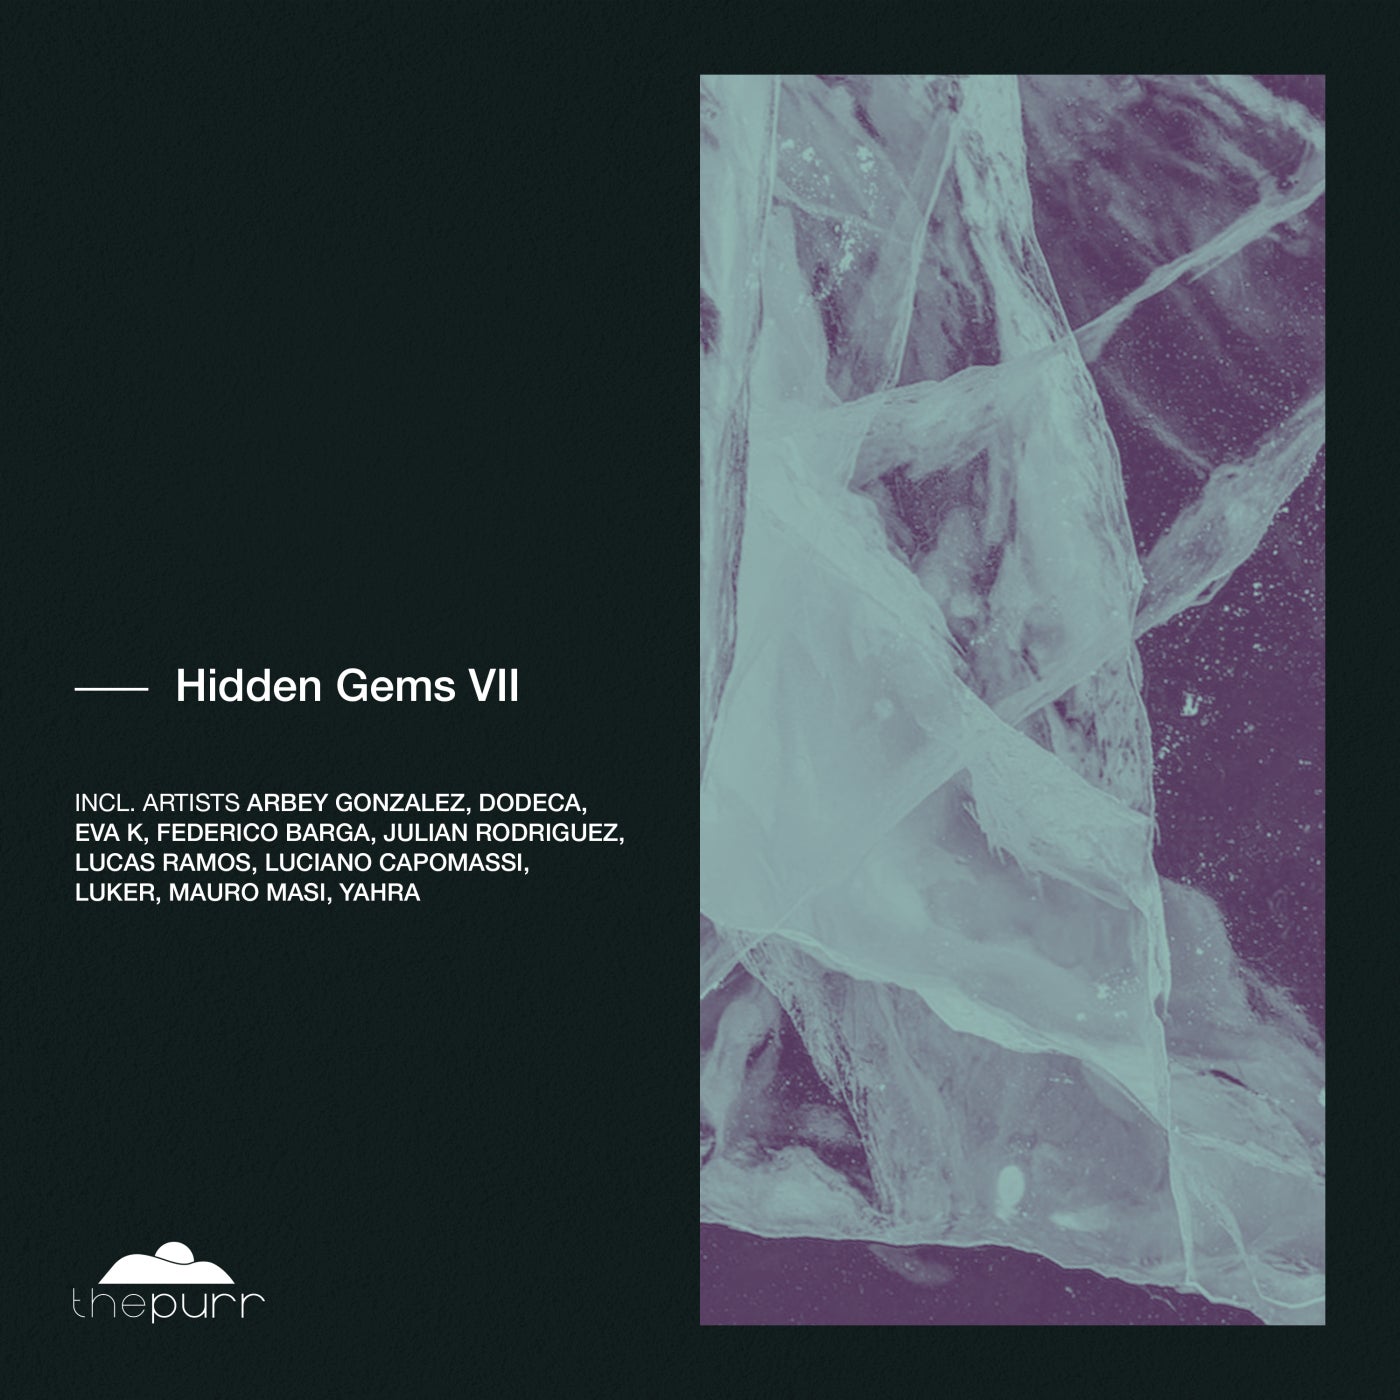 arbey gonzalez, Dodeca – Hidden Gems VII [PURR376]